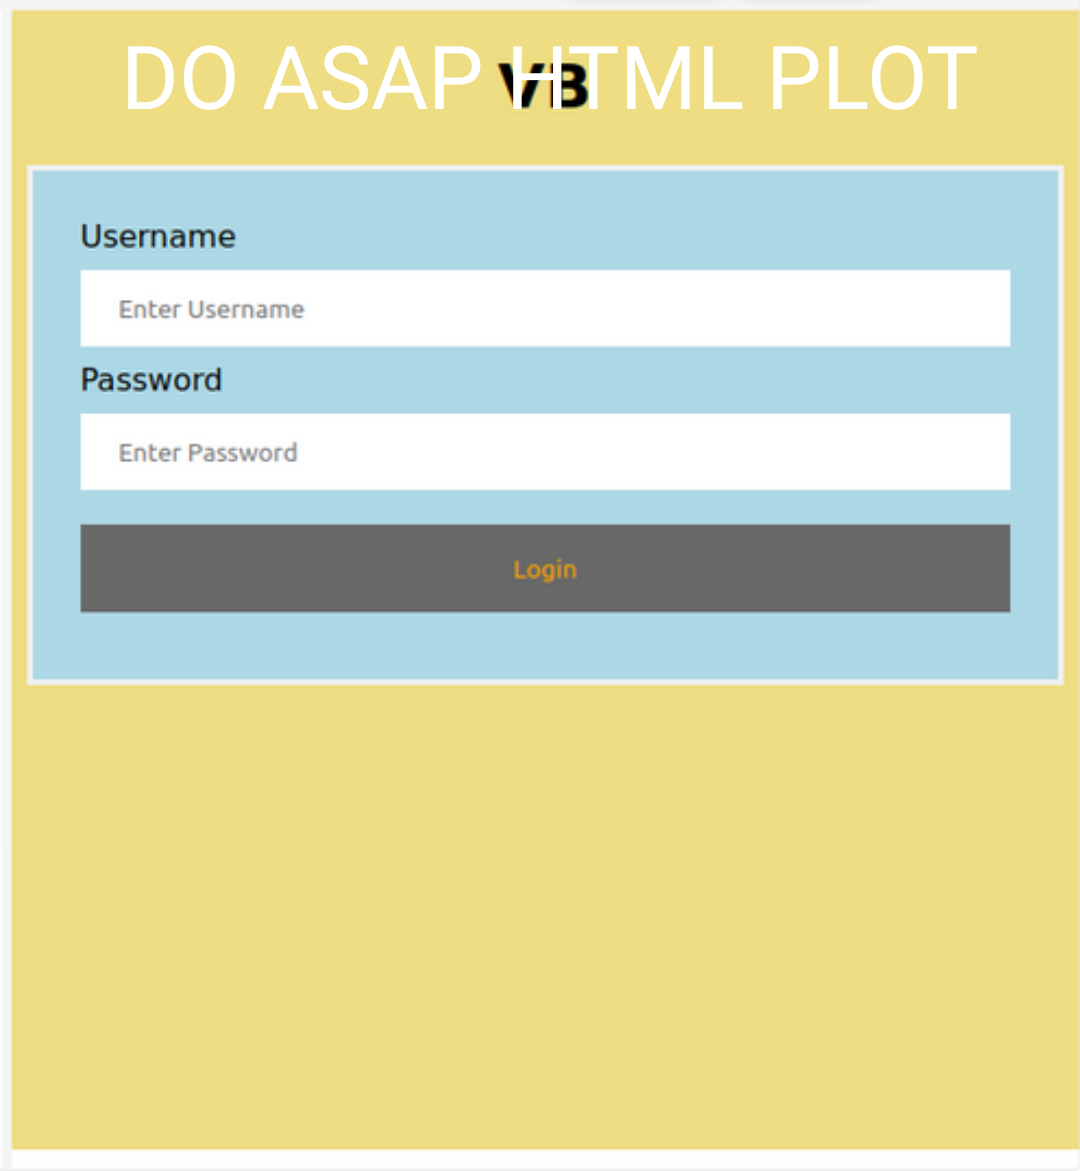 DO ASAP BML PLOT
Username
Enter Username
Password
Enter Password
Login